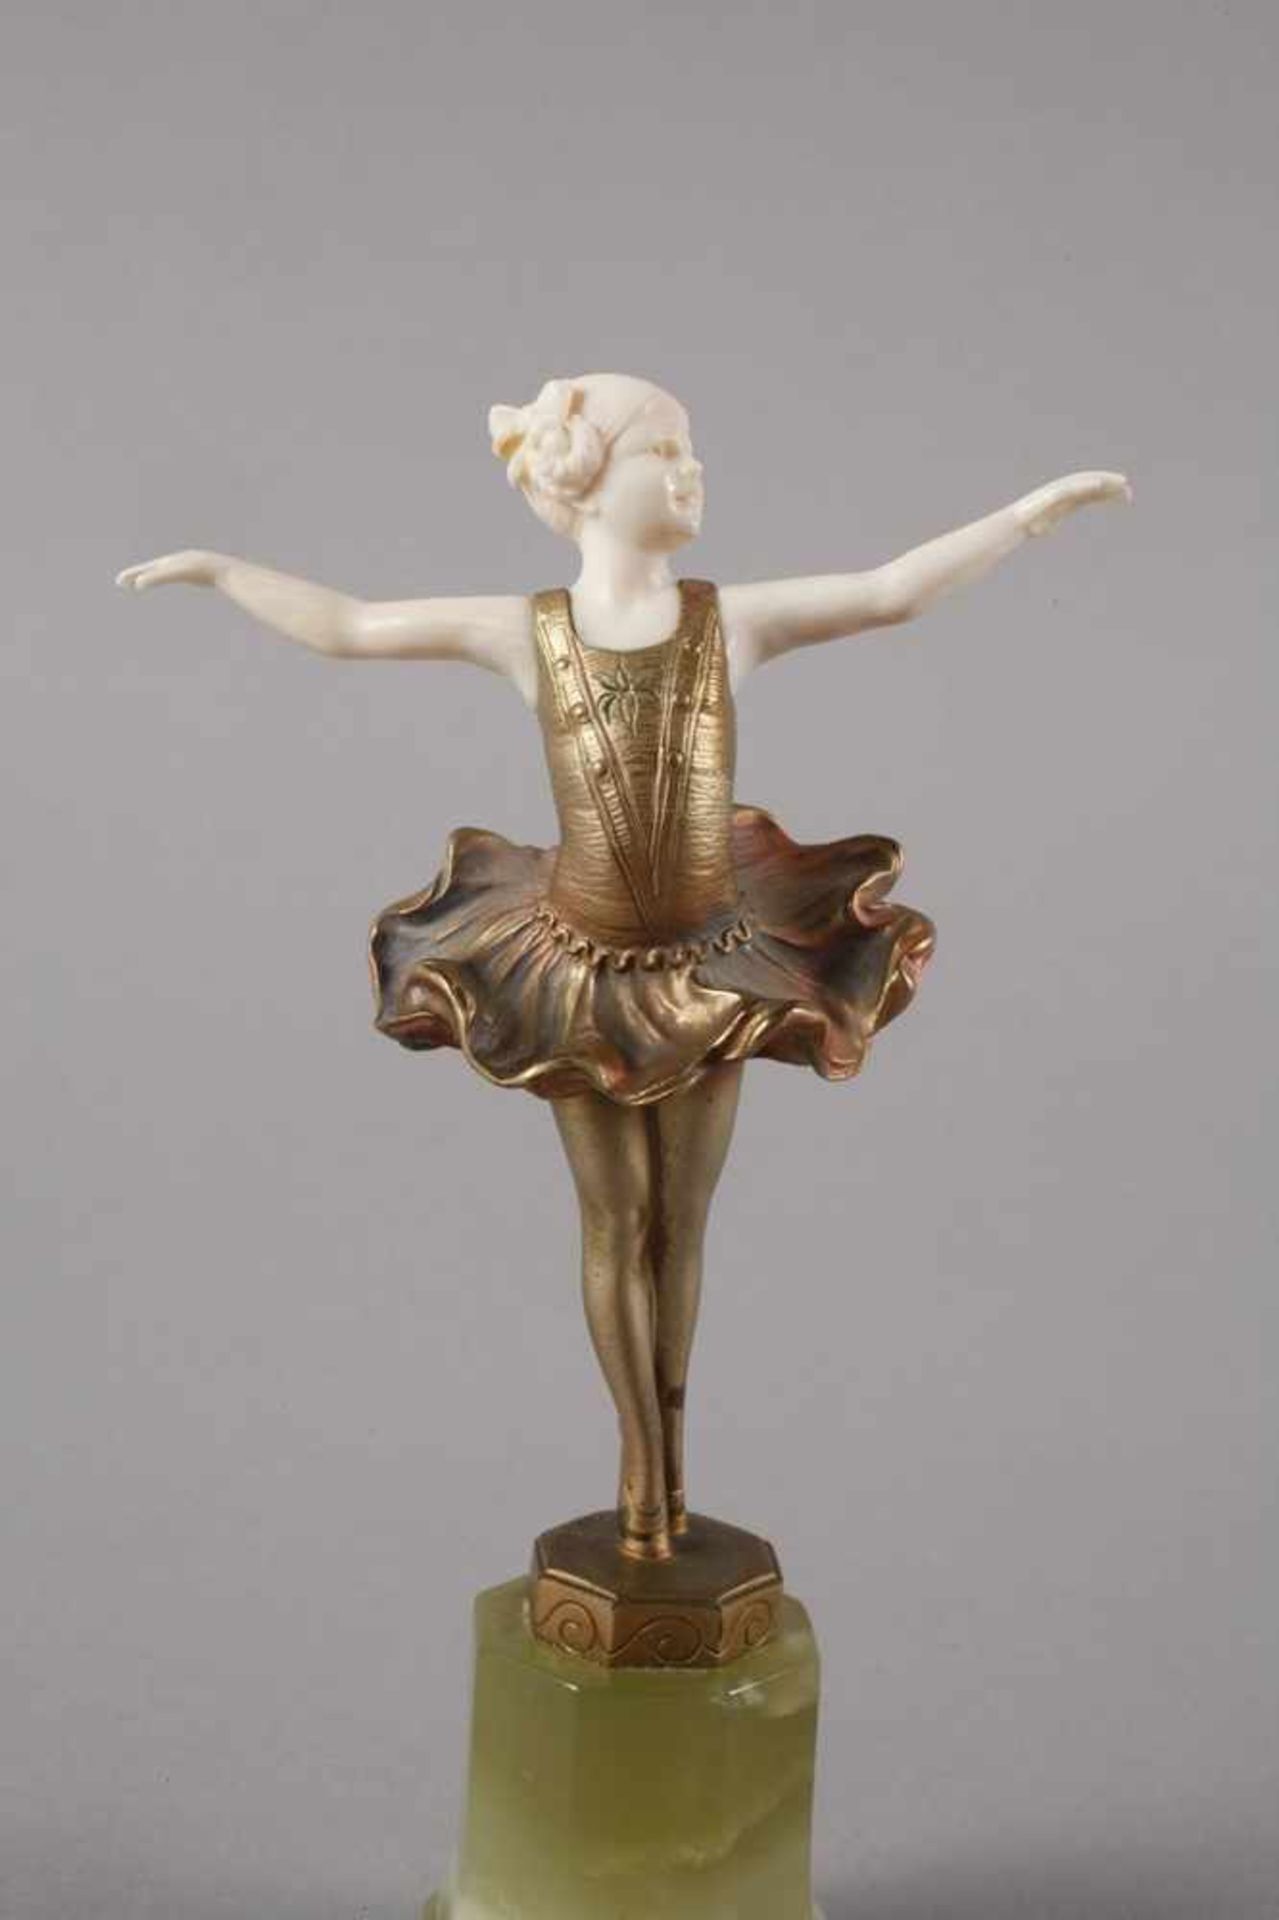 Ferdinand Preiss, Chryselephantin Ballerina1925, Erbach, signiert, Bronze golden und nuanciert - Bild 2 aus 5